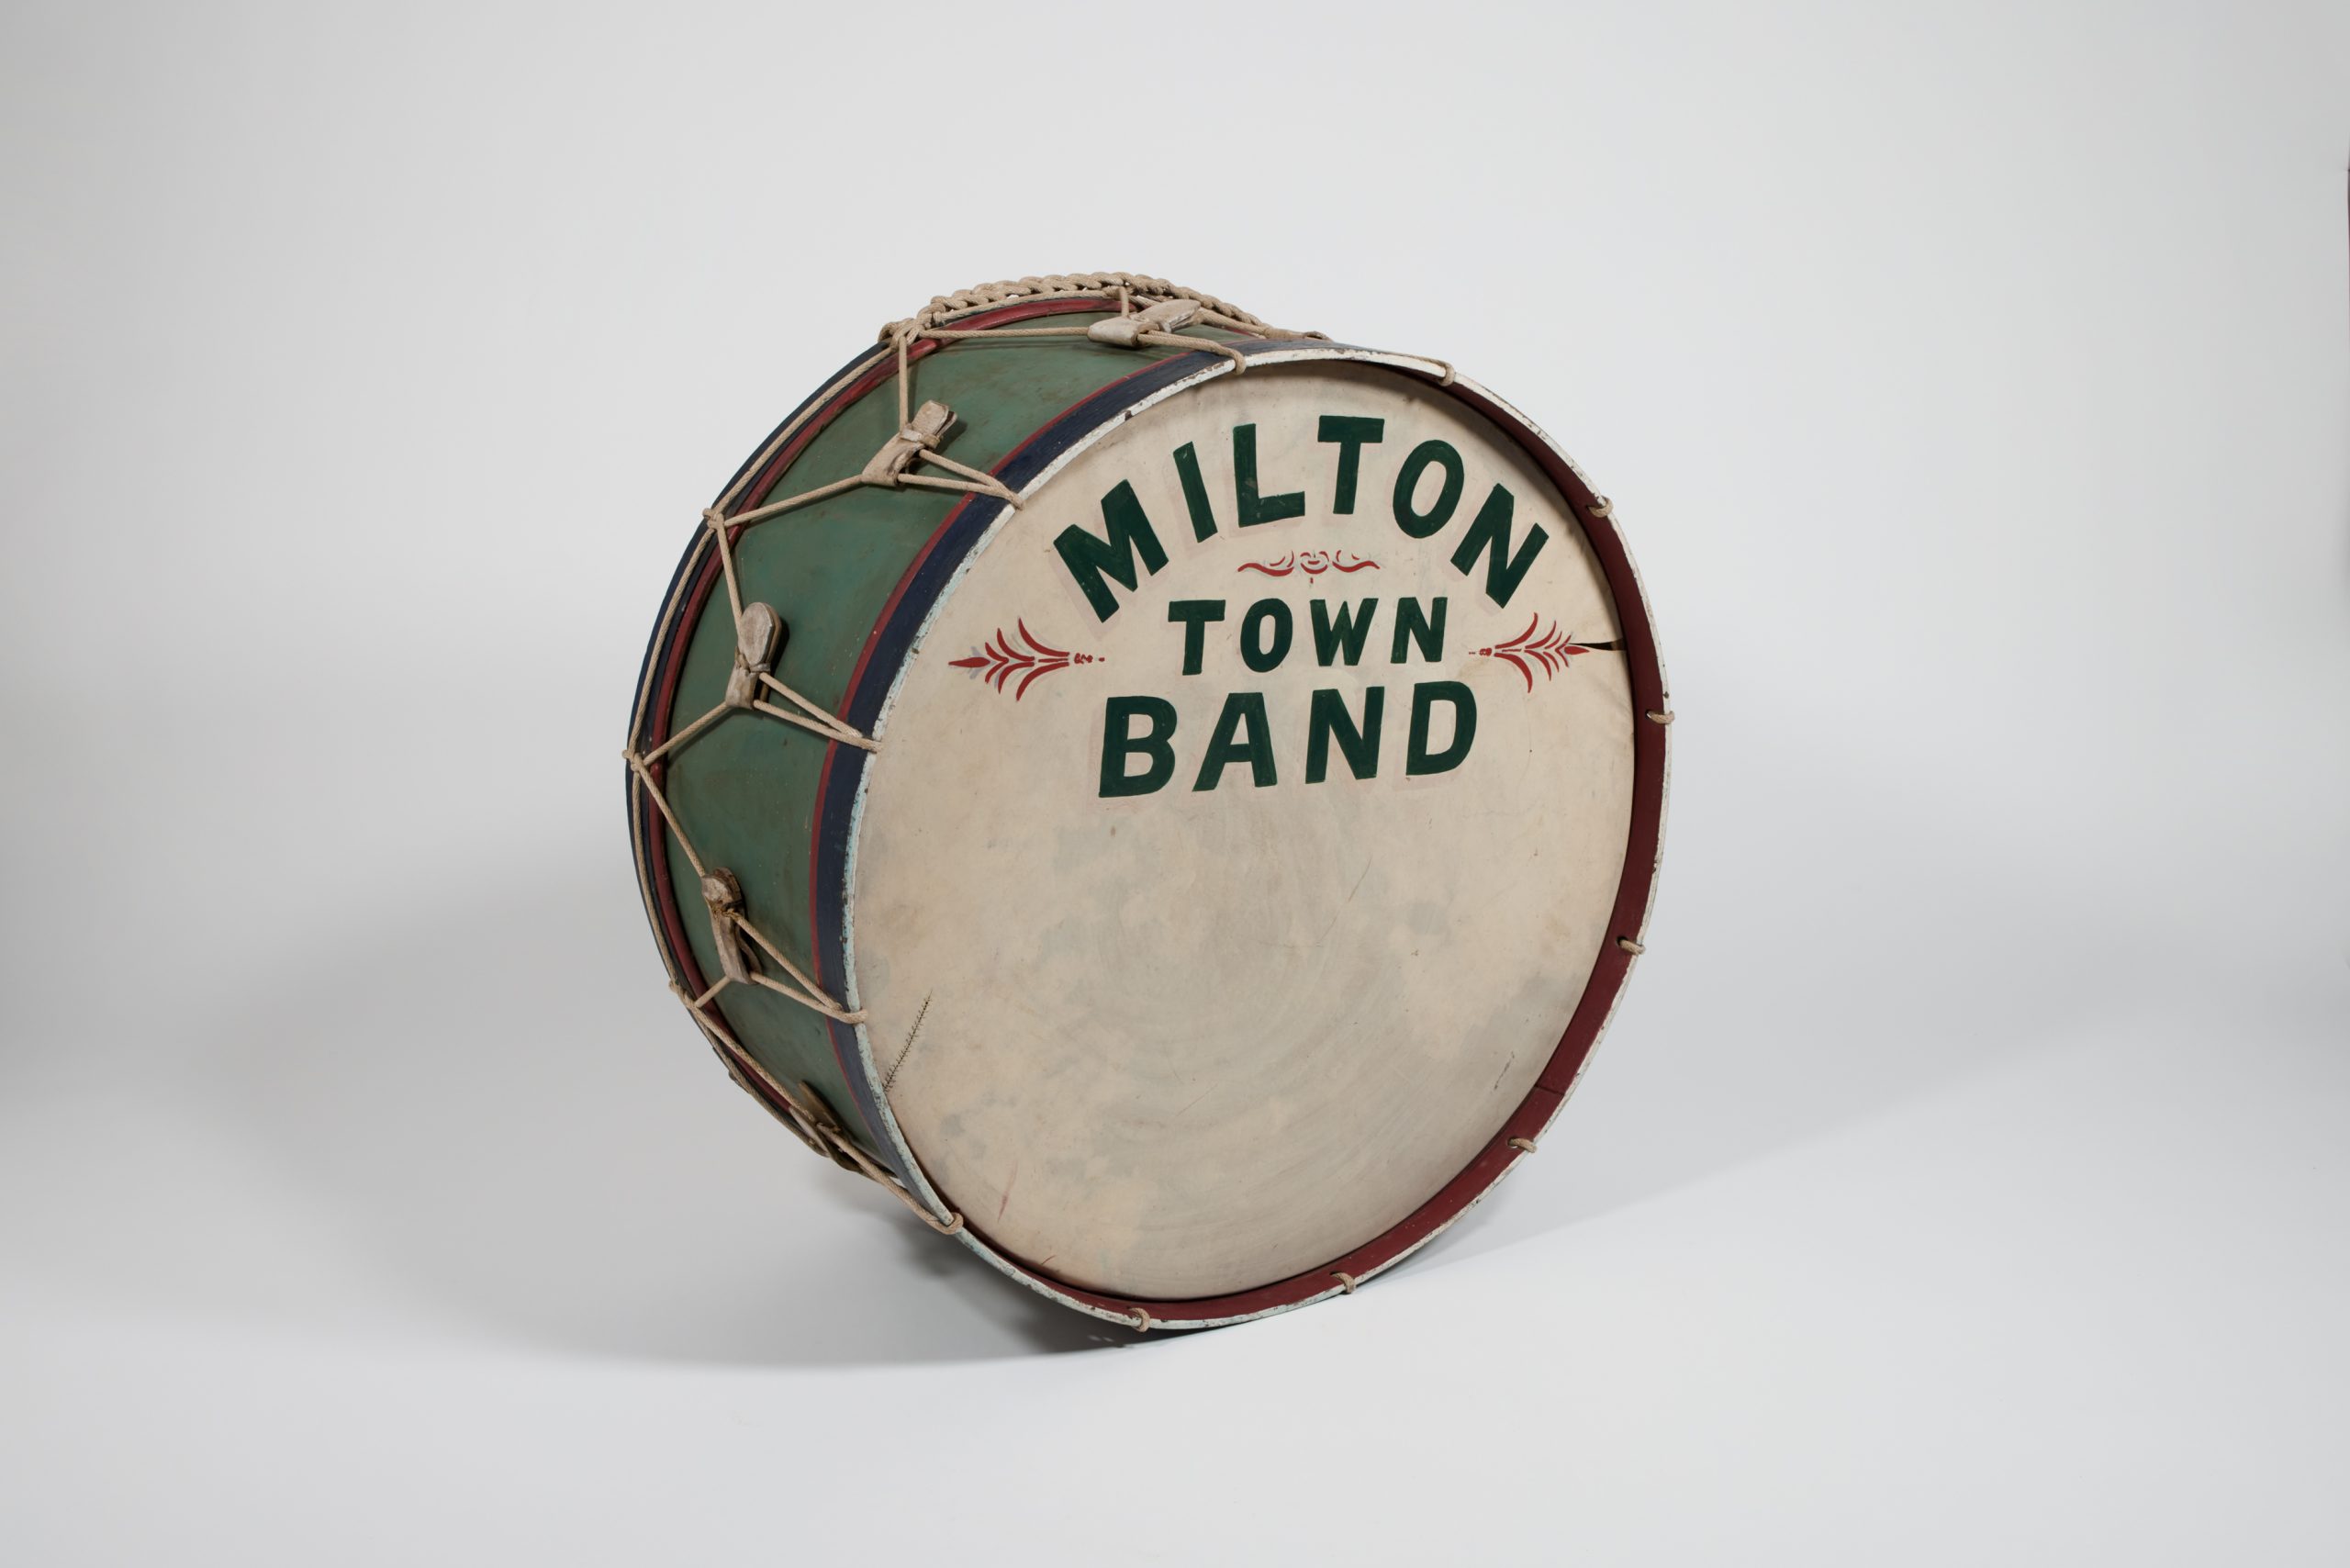 Green bass drum ensribed "MILTON TOWN BAND"